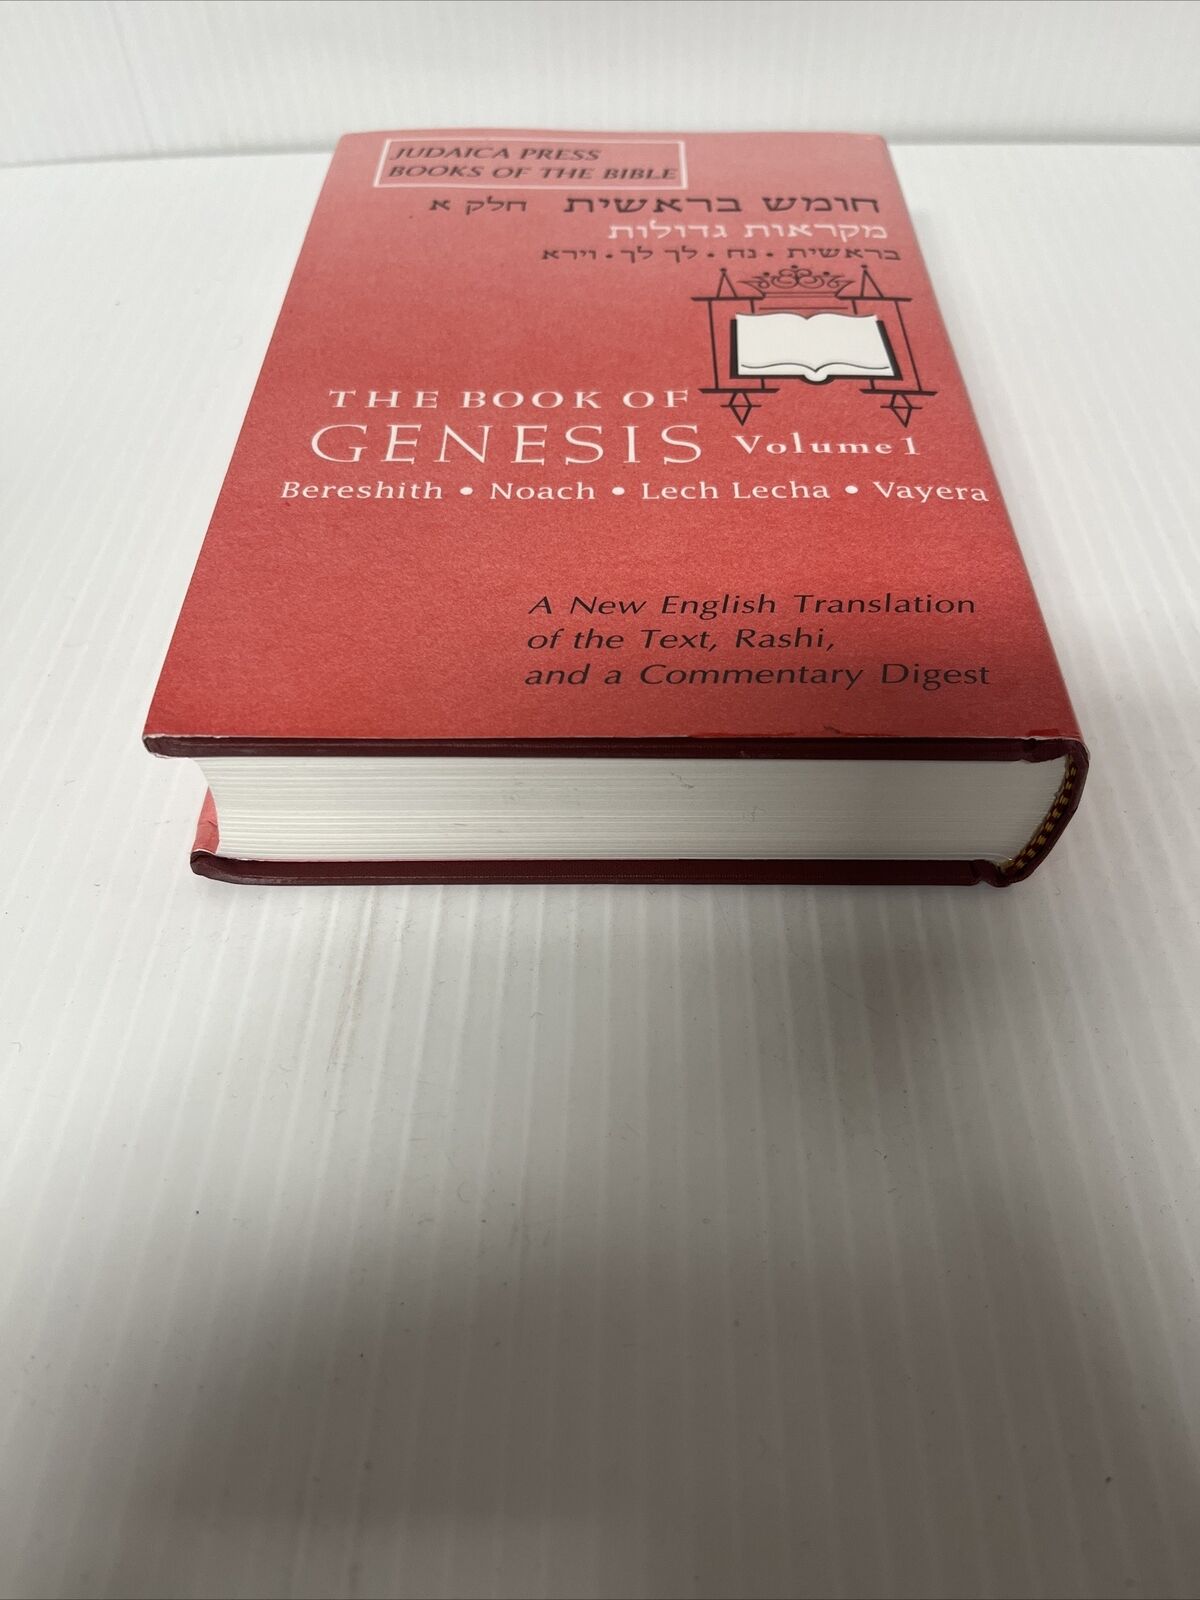 HEBREW-ENGLISH MIKRAOT GEDOLOT BOOK OF GENESIS I Judaica Press Edition of Bible